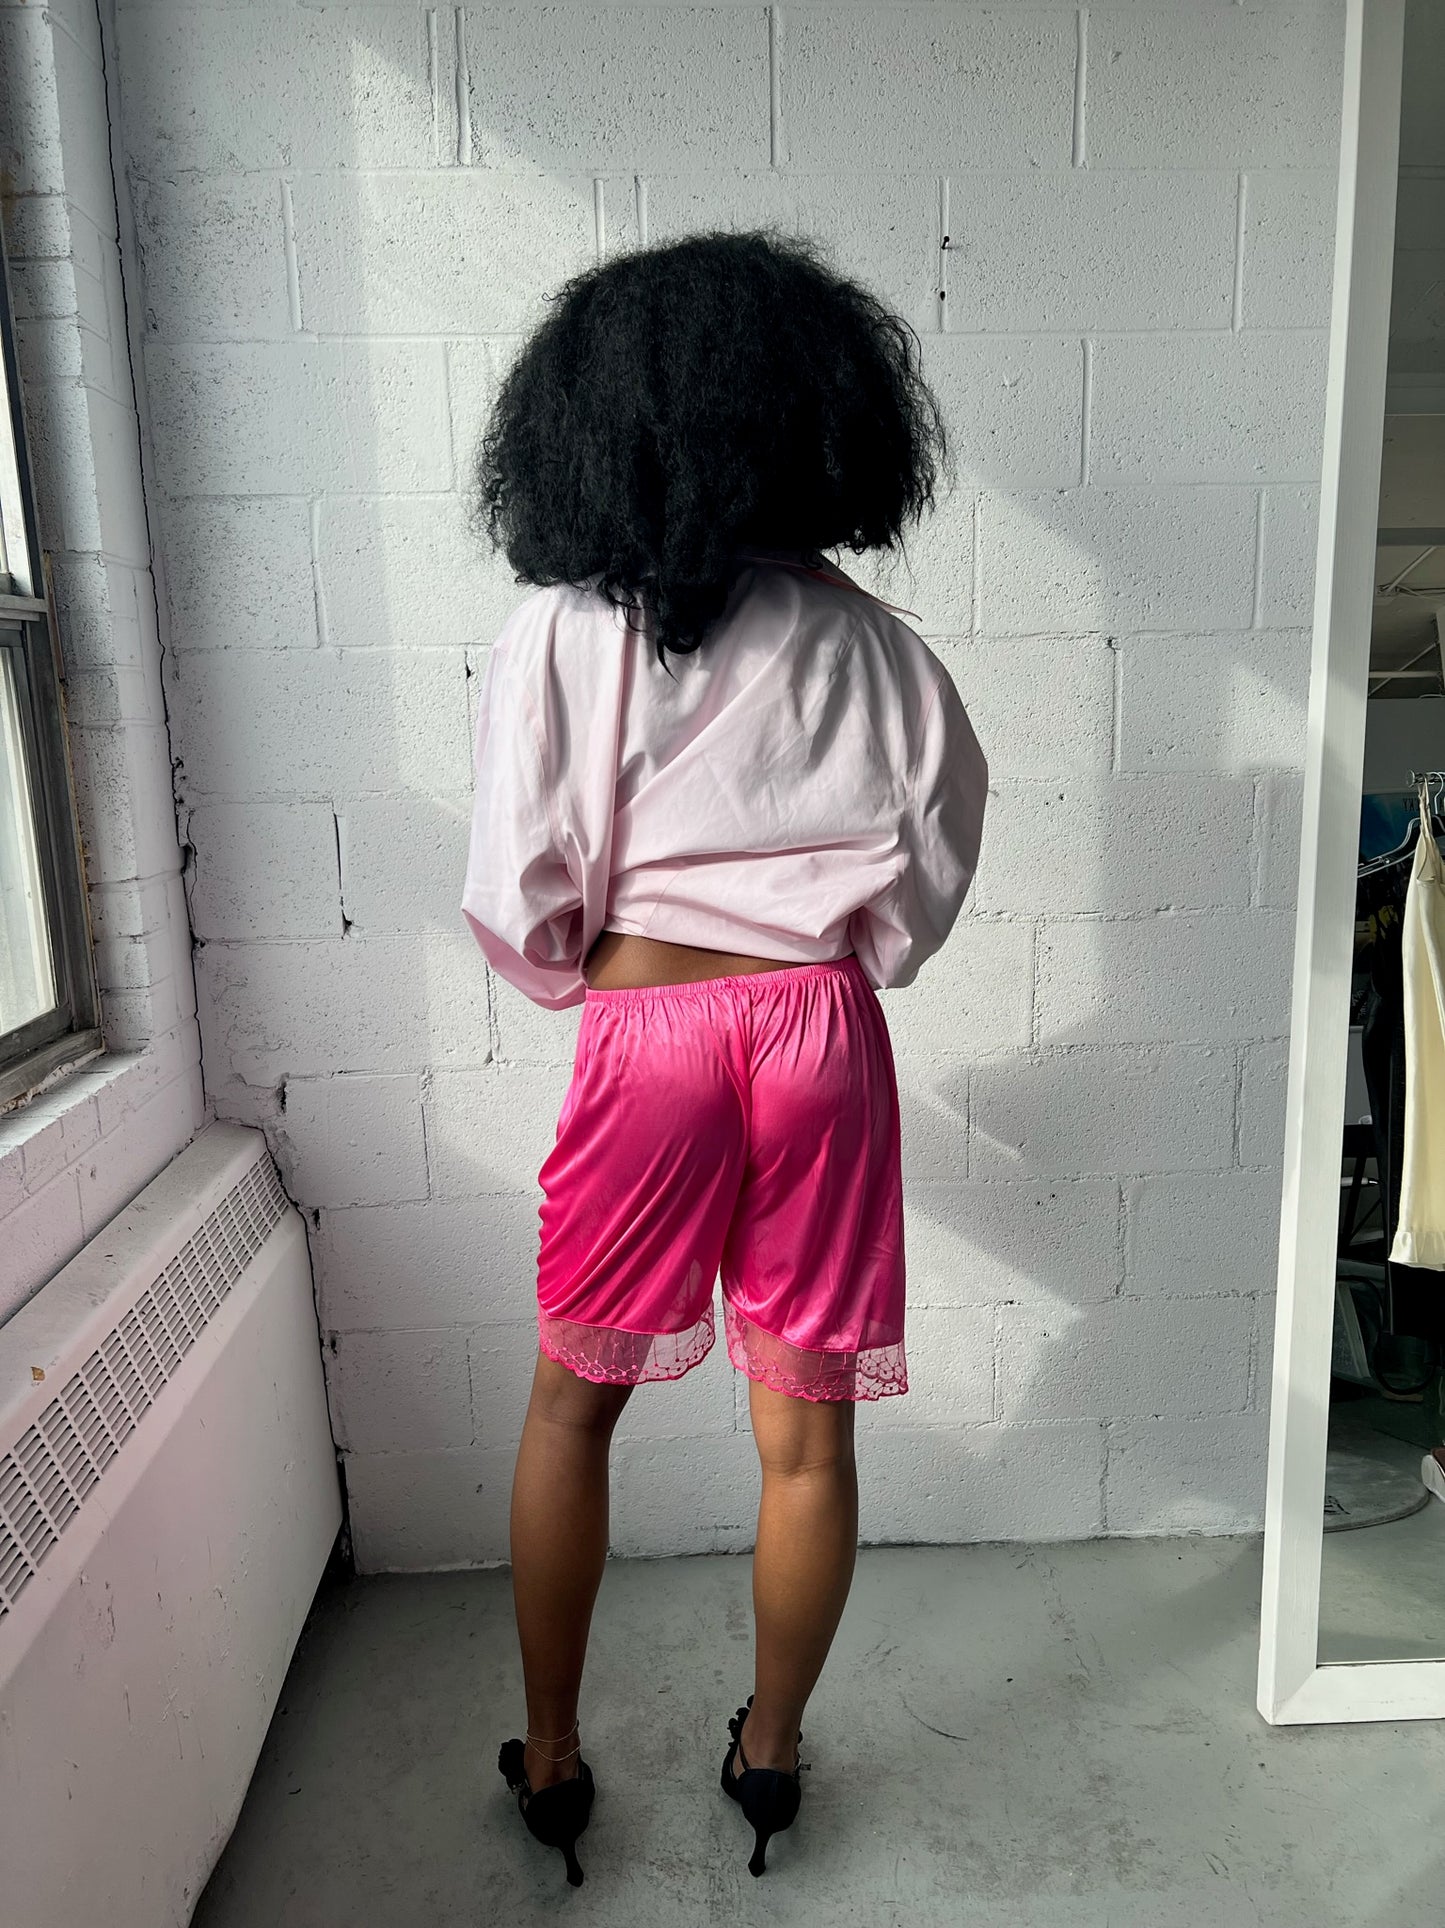 Hot Pink Lingerie Shorts